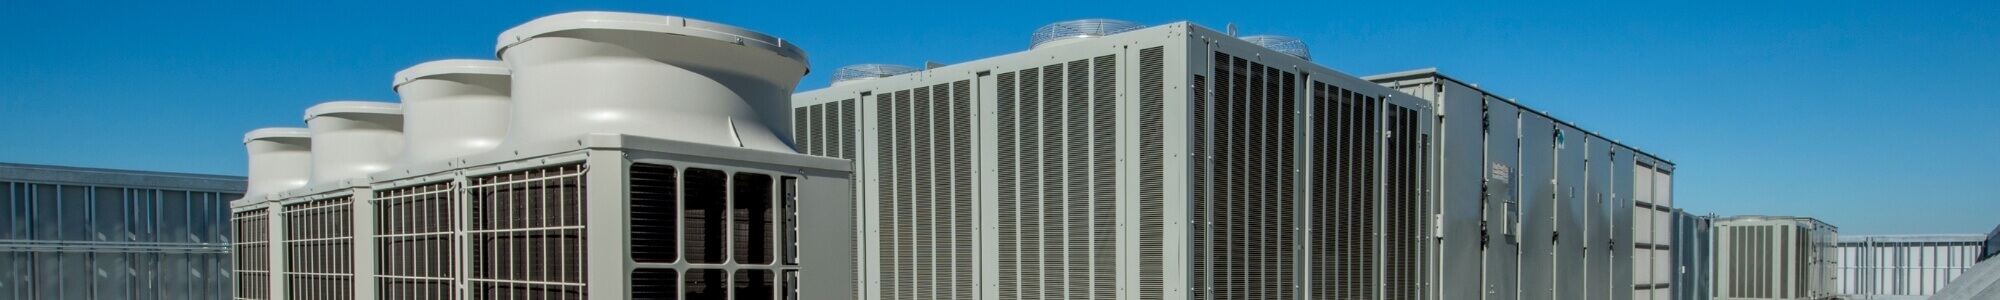 HVAC services in Bradford